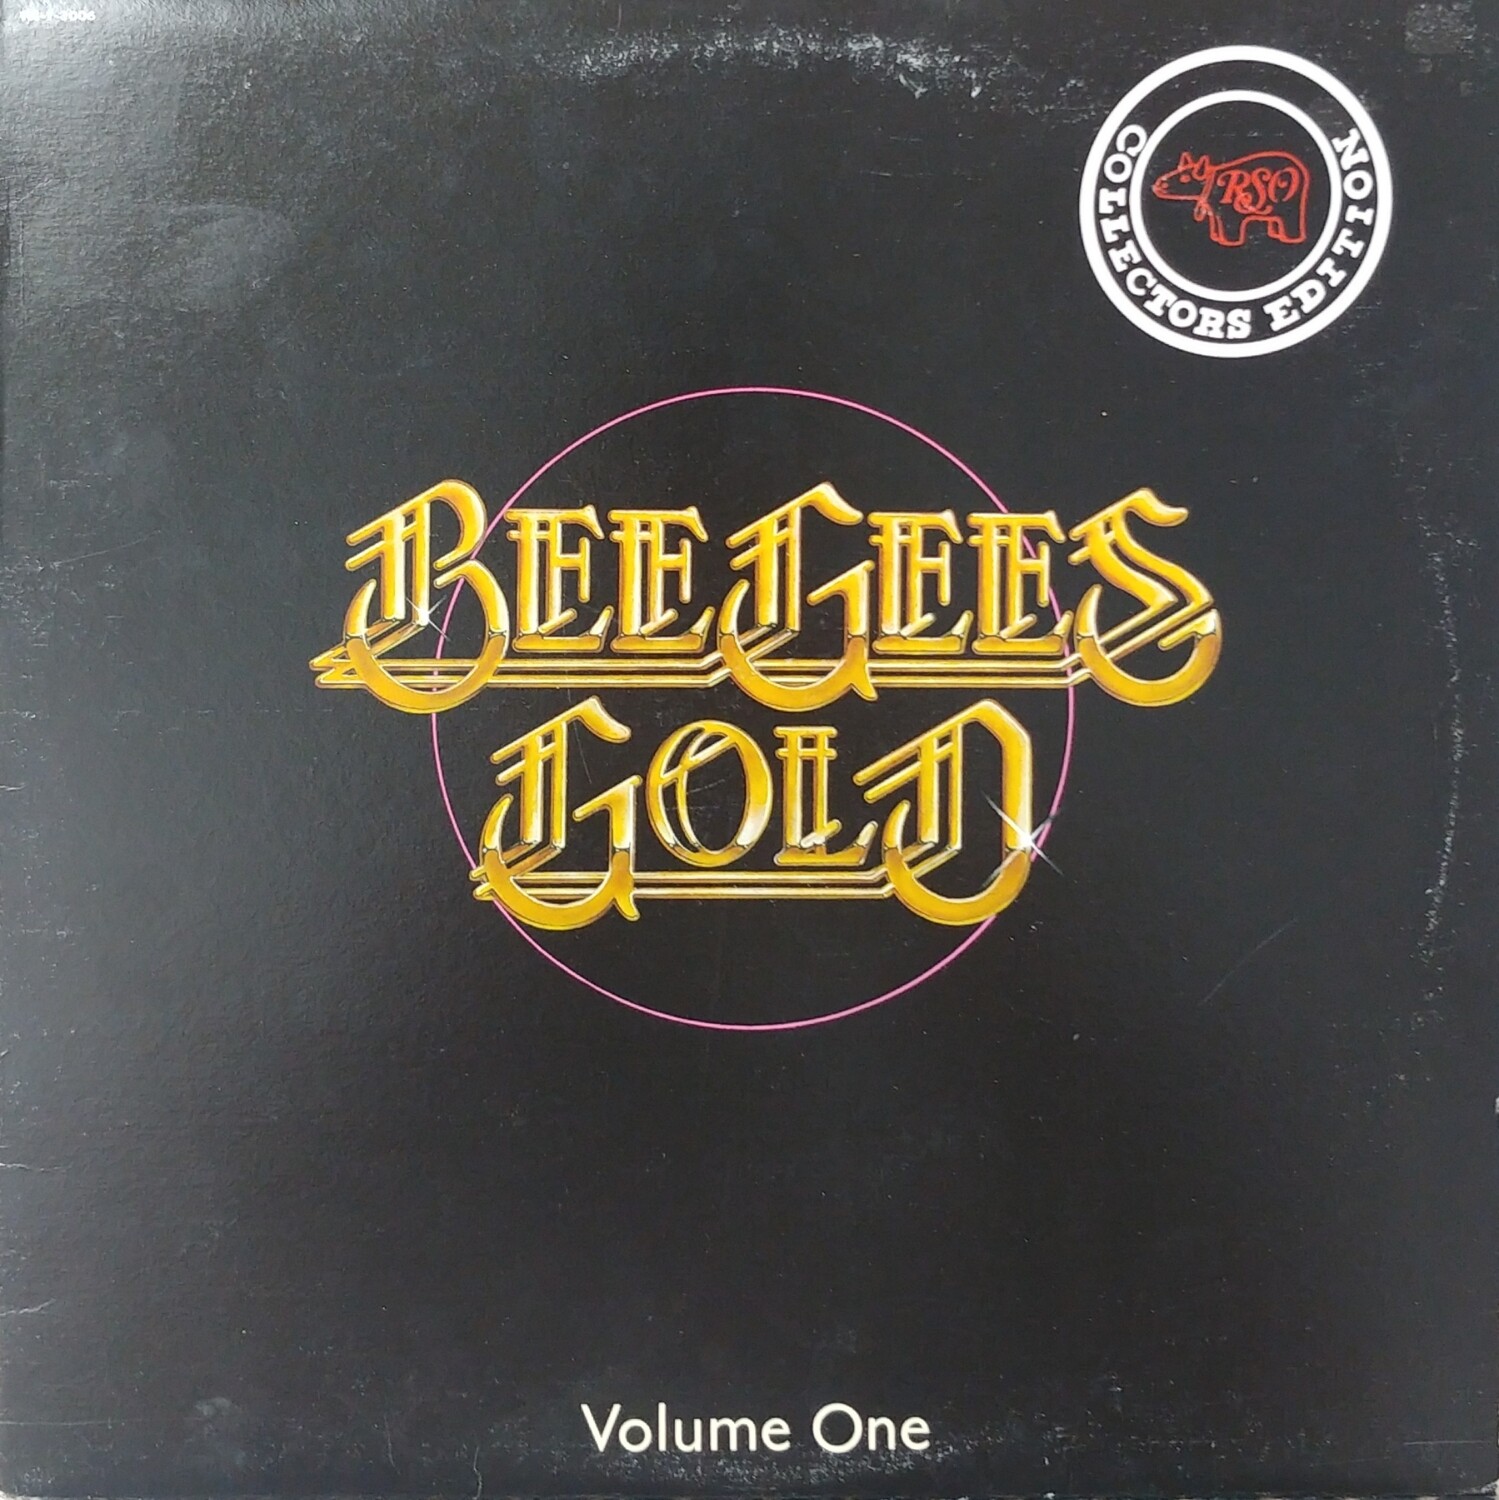 Bee Gees - Bee Gees Gold vol.1